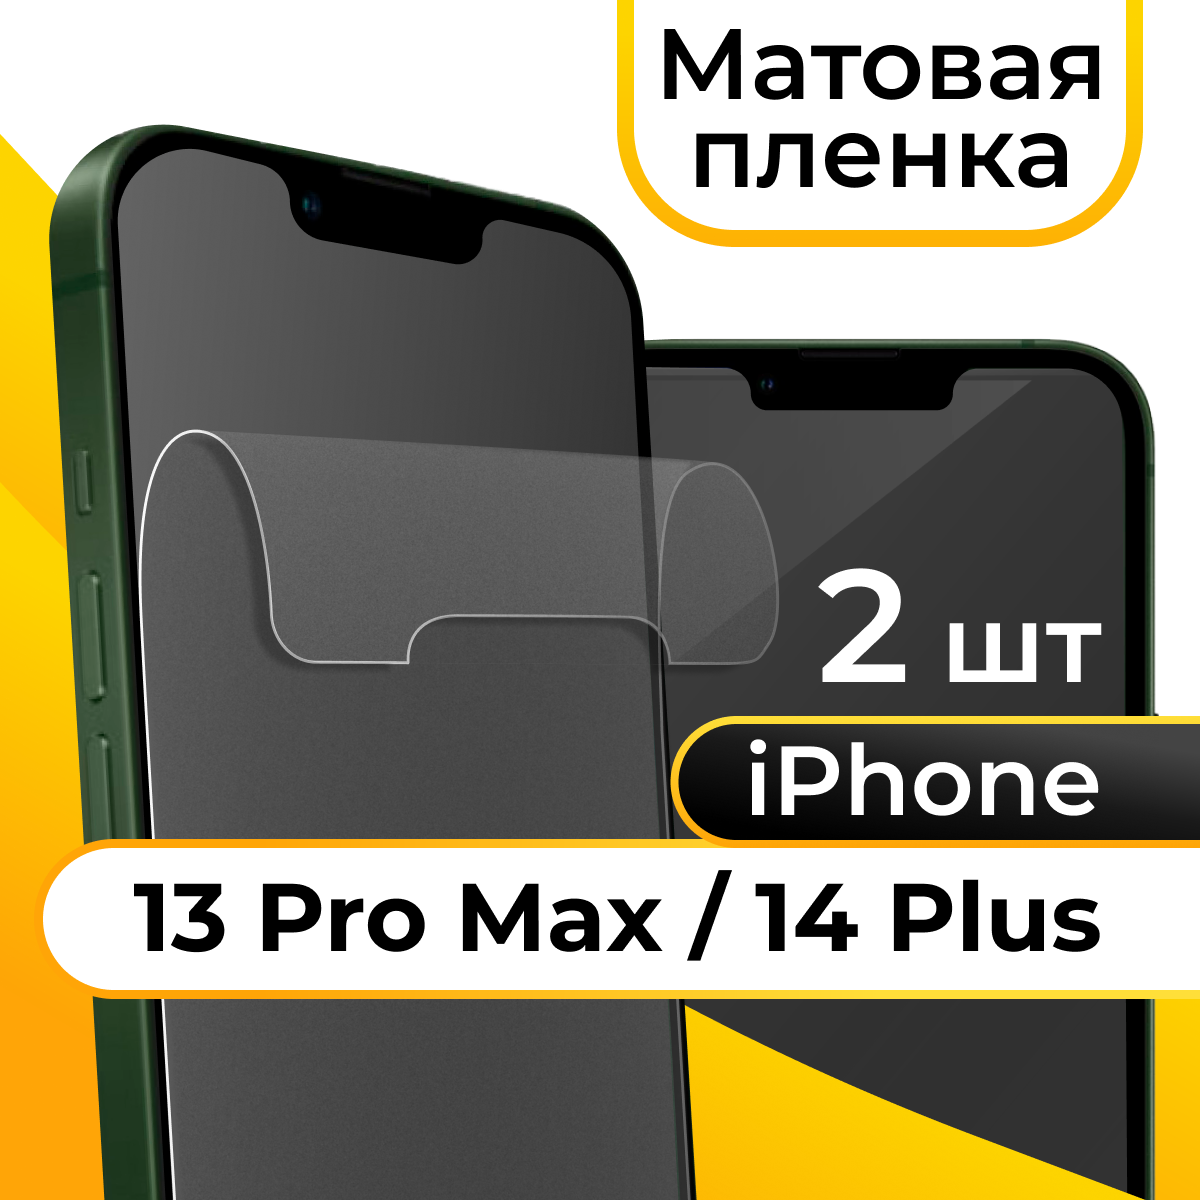 Матовая пленка для смартфона Apple iPhone 13 Pro Max и 14 Plus / Защитная пленка на телефон Эпл Айфон 13 Про Макс и 14 Плюс / Гидрогелевая пленка